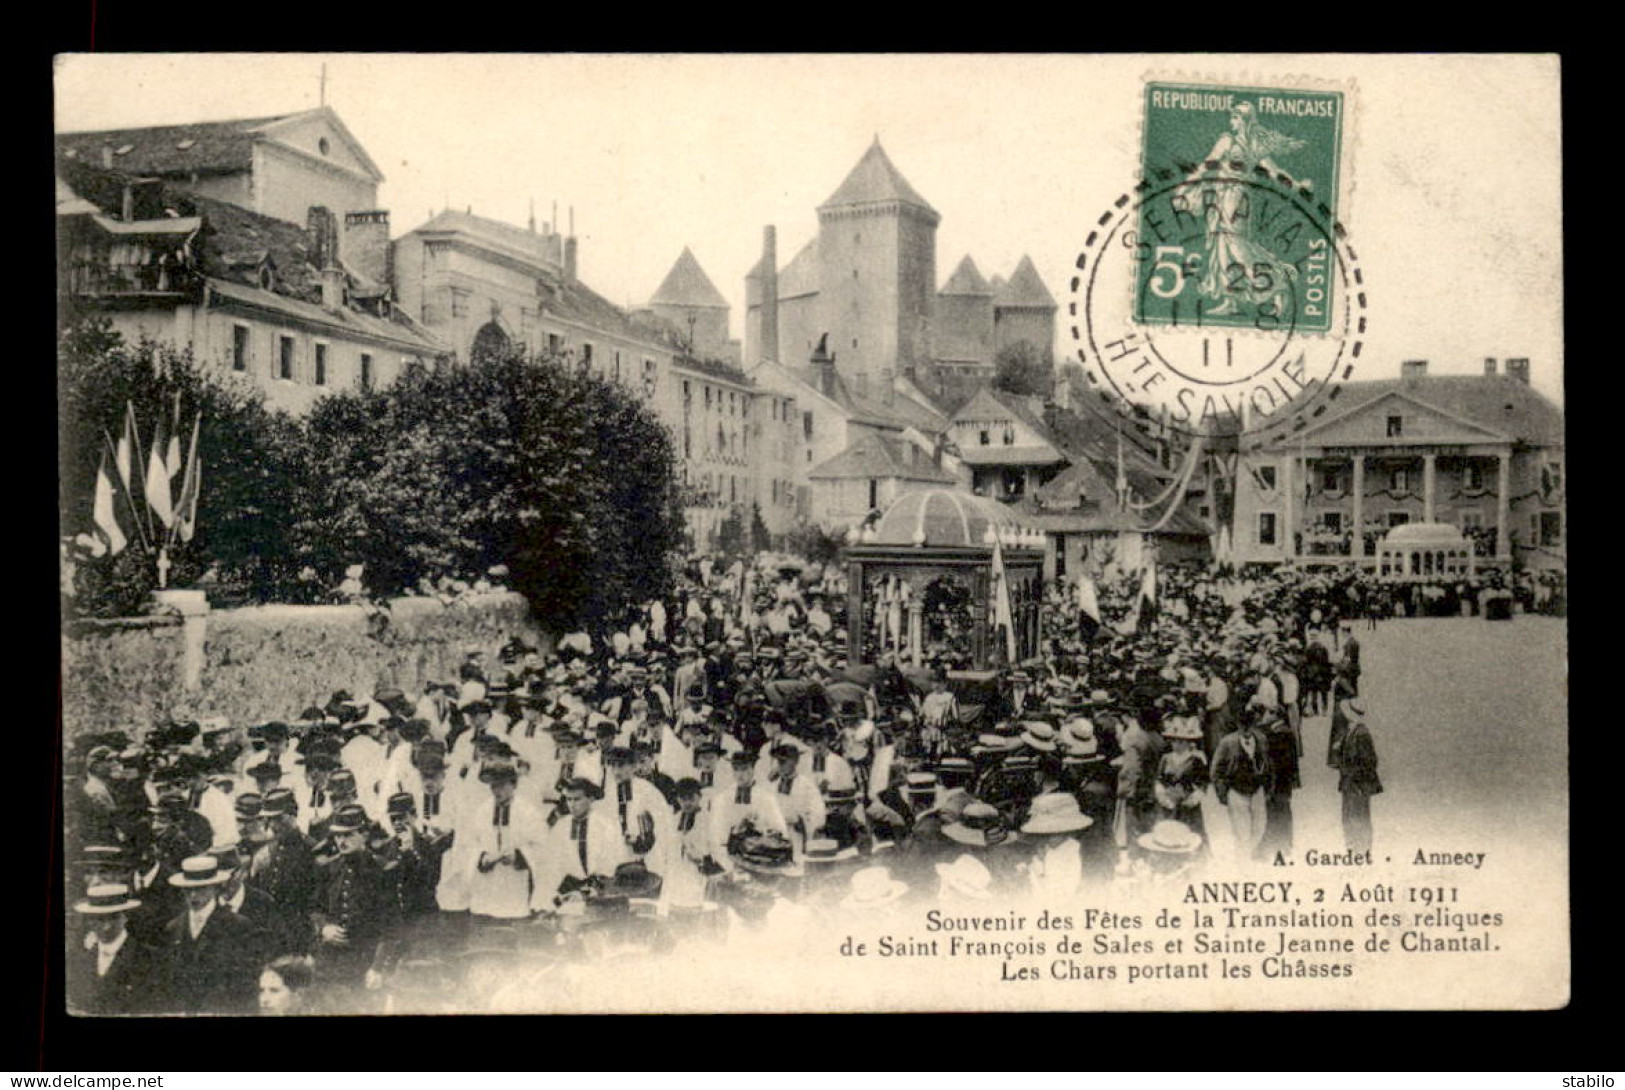 74 - ANNECY - FETES RELIGIEUSES DU 2 AOUT 1911 - Annecy